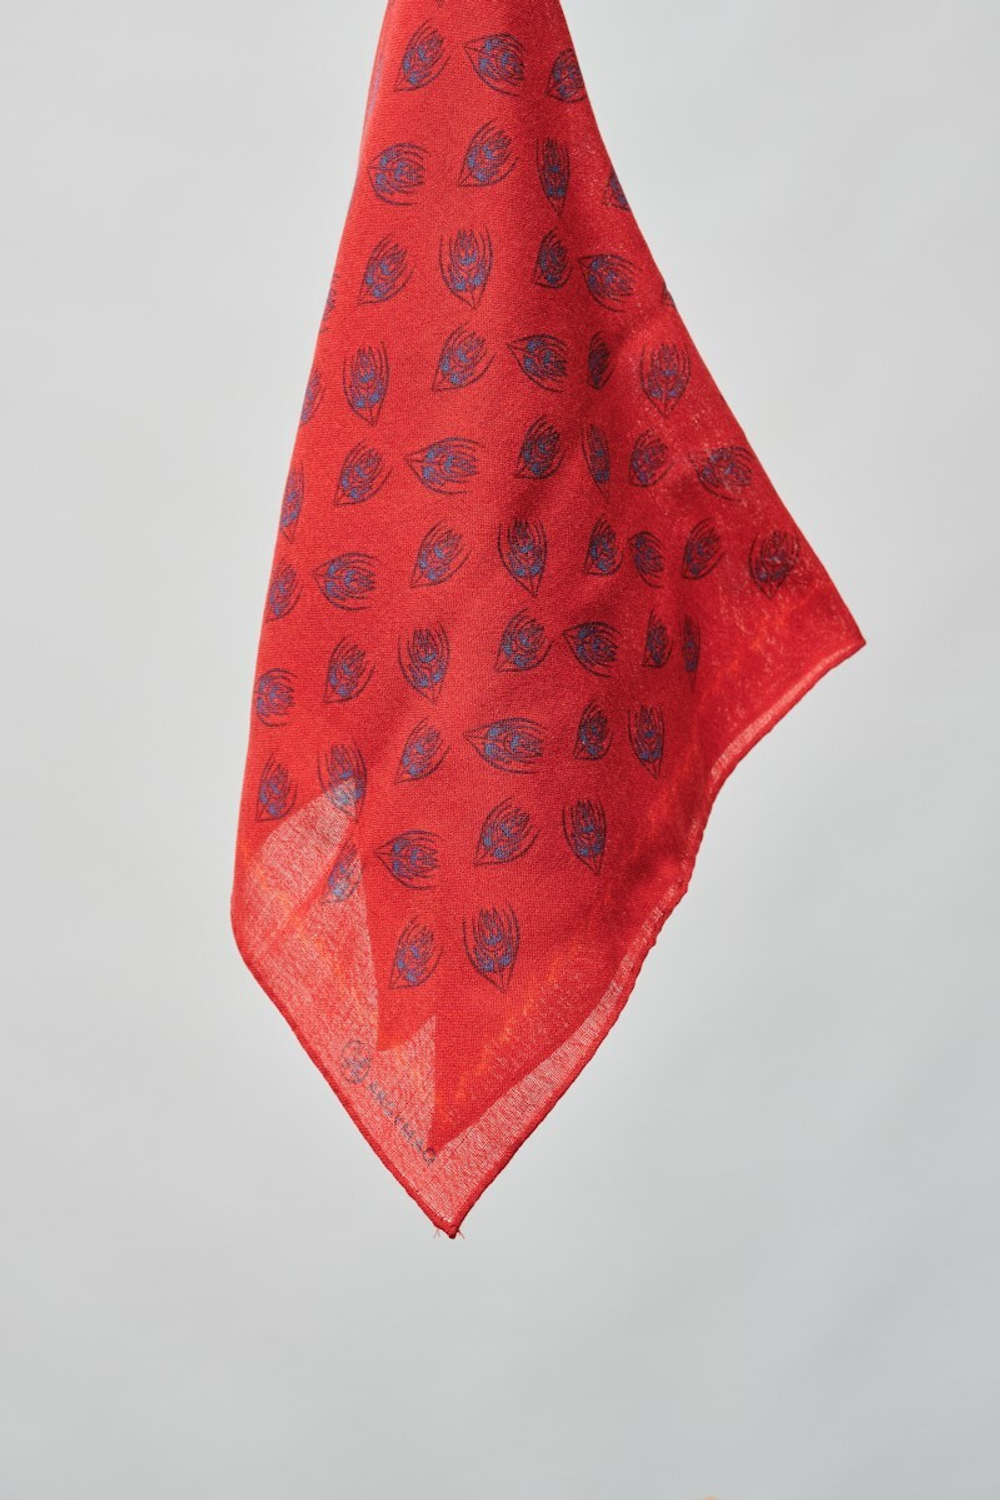 Шерстяной платок Ласточка и тюльпан RED 70×70